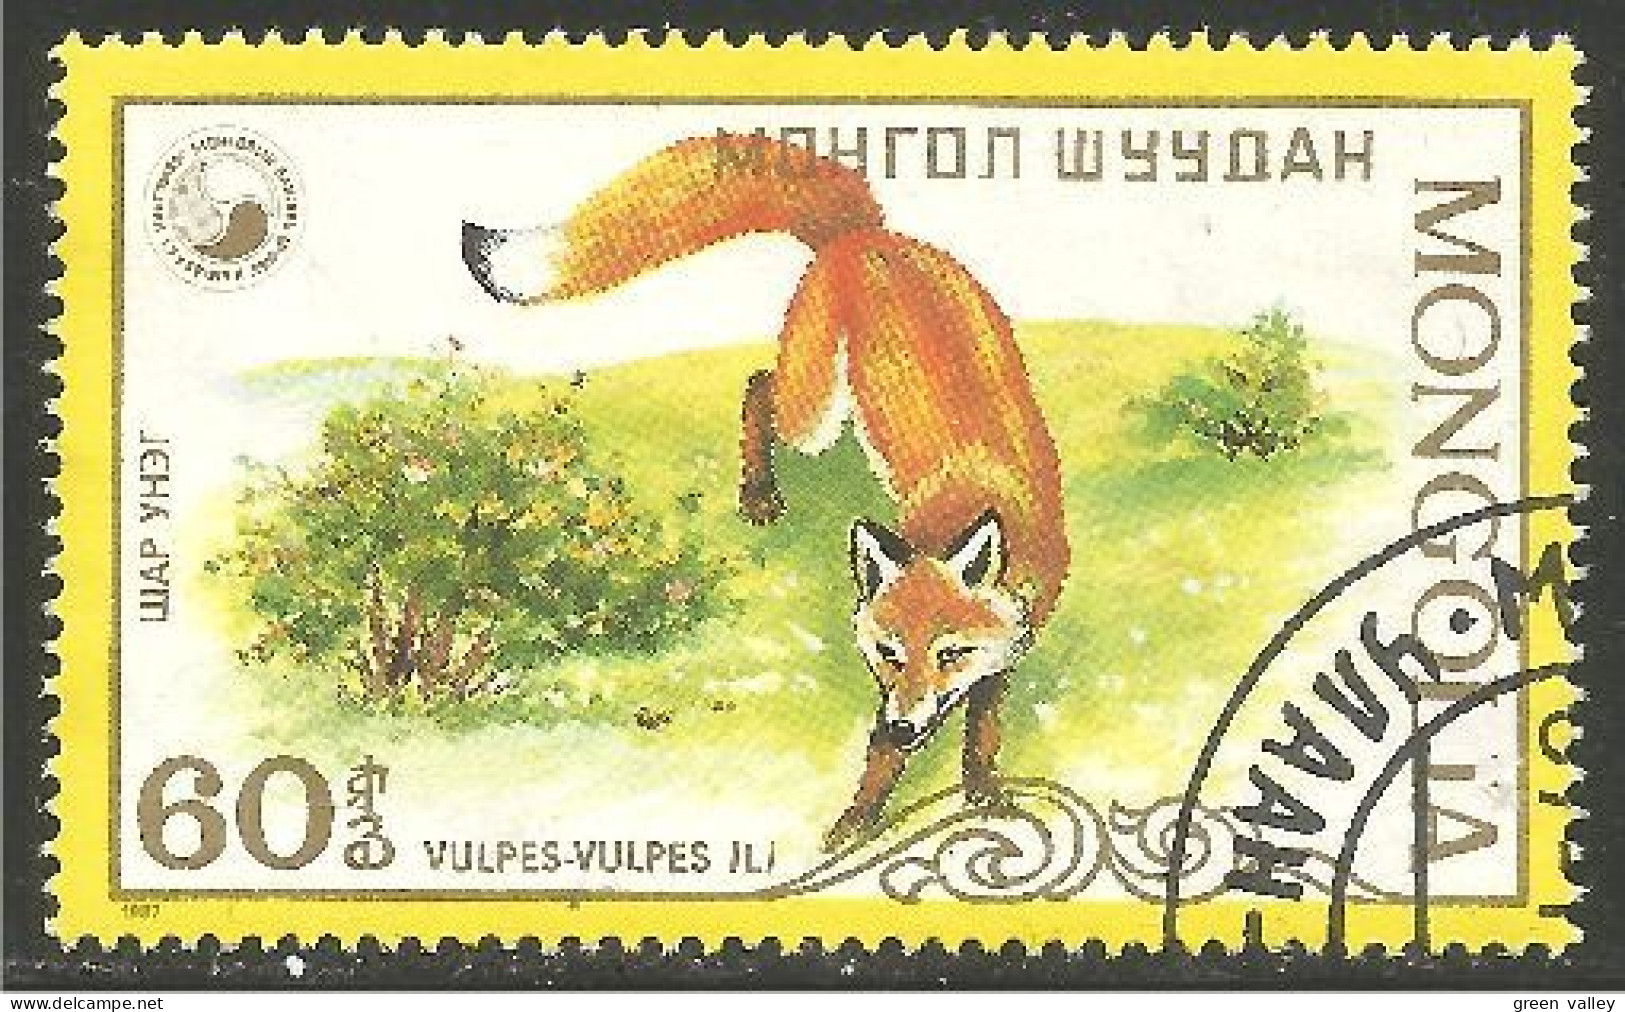 DG-31 Mongolie Renard Fox Fuchs Volpe Raposa Zorro Vos - Dogs